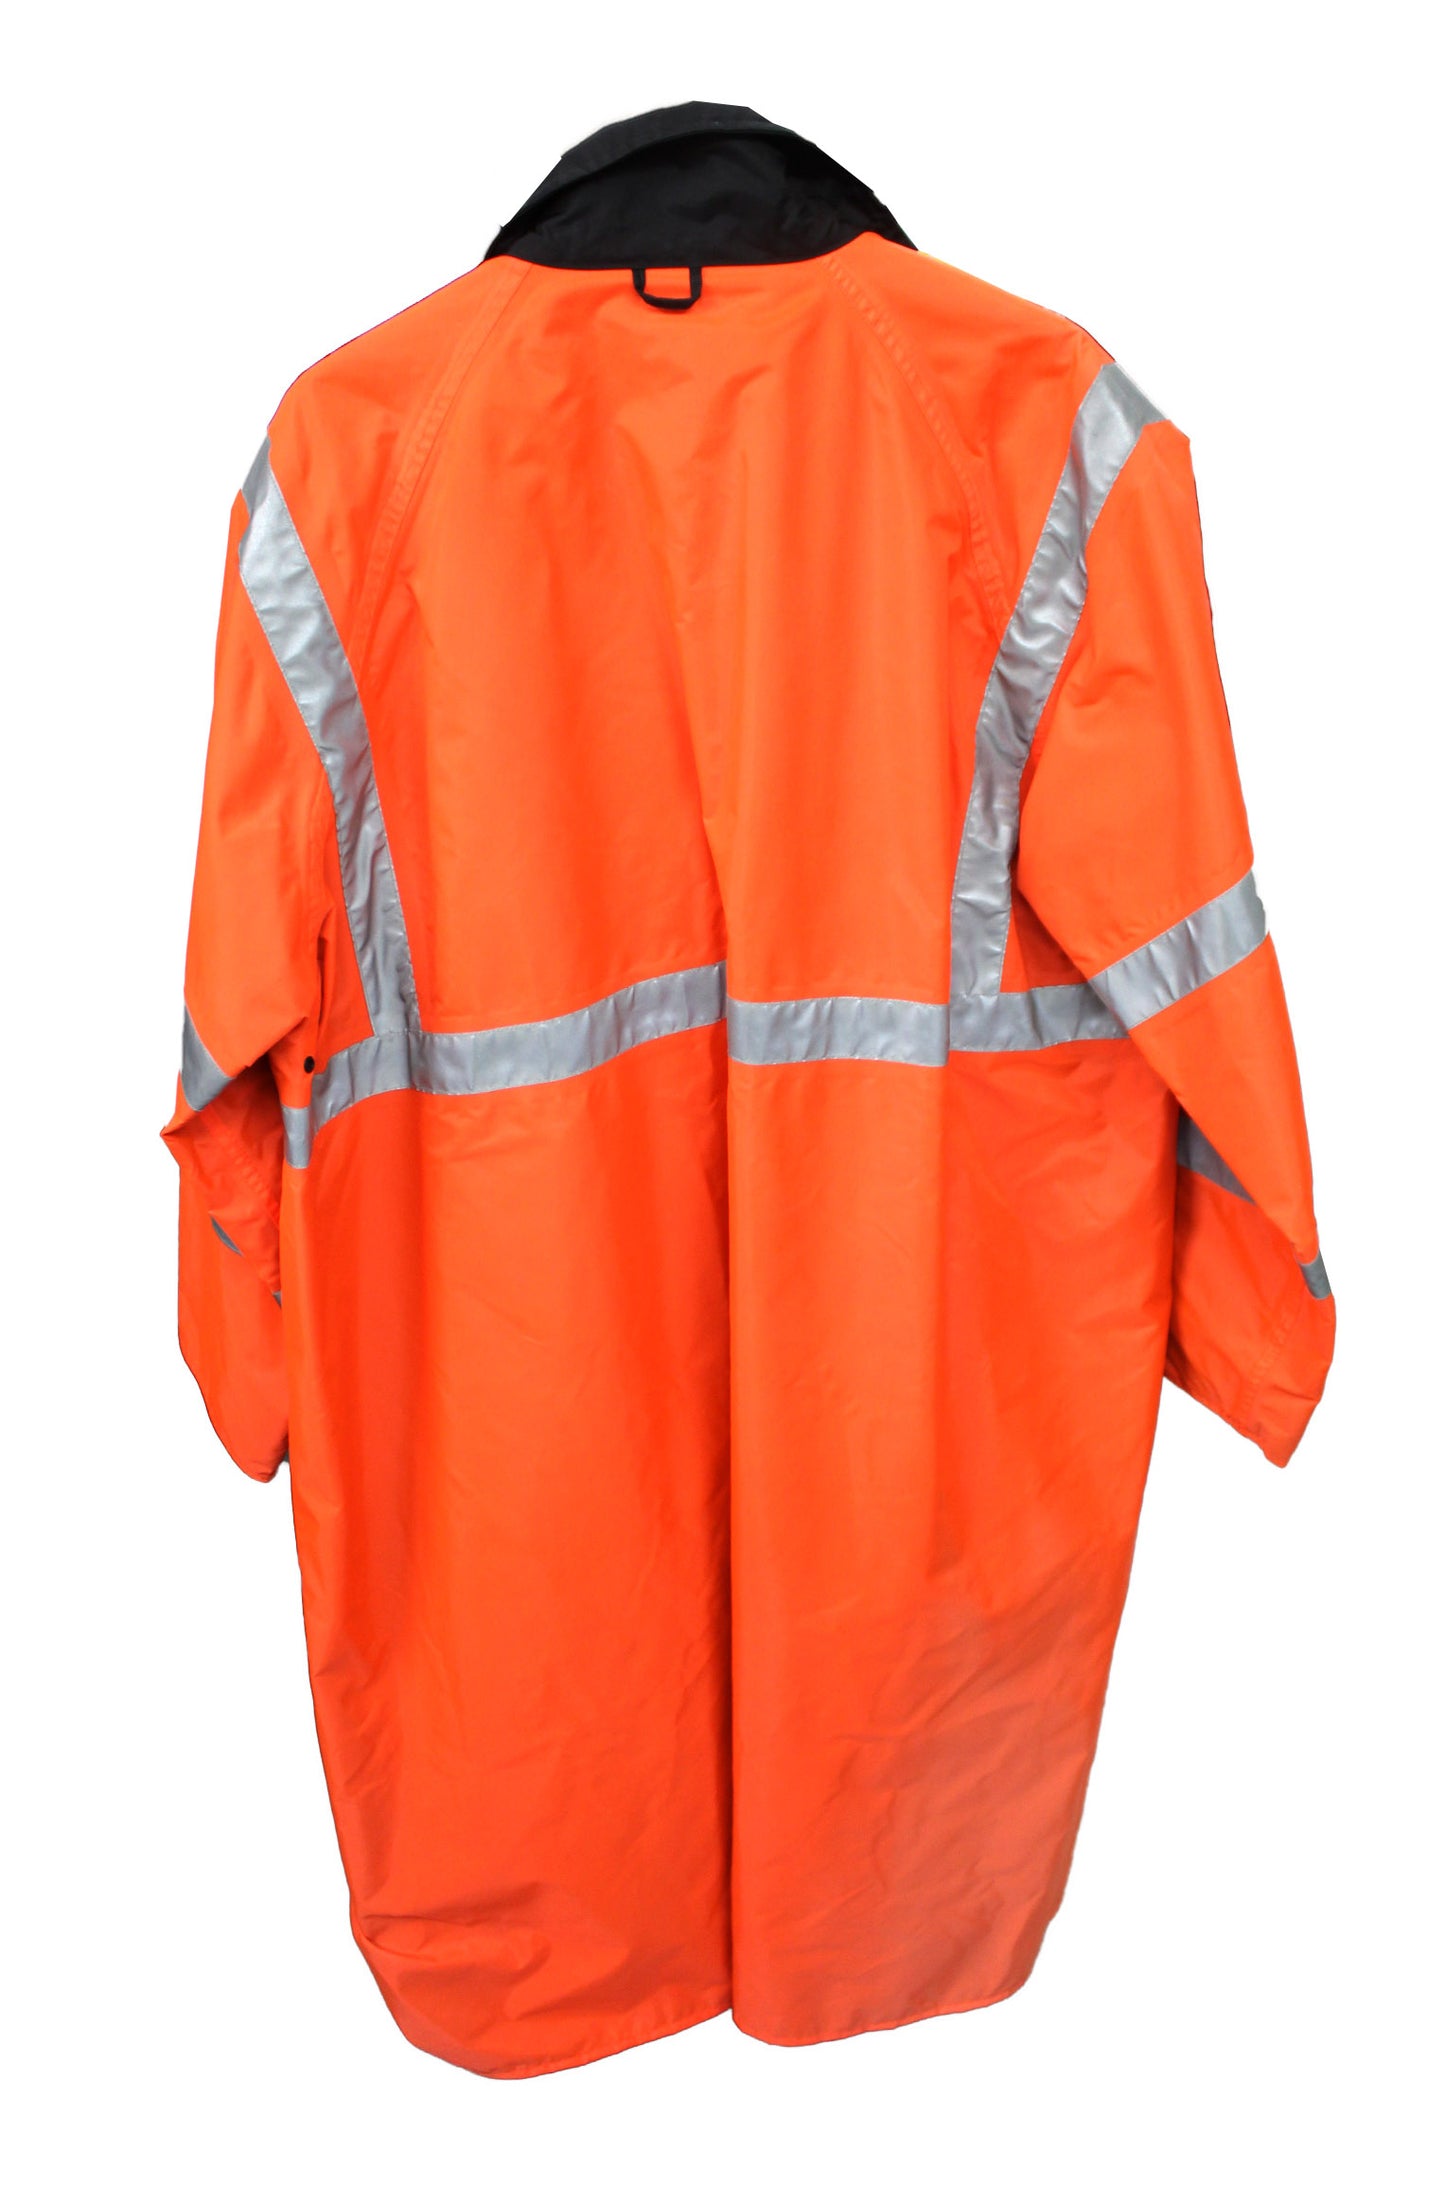 Solar 1 Clothing Knee Length Police Raincoat Reversible RR03 Orange/Black Large